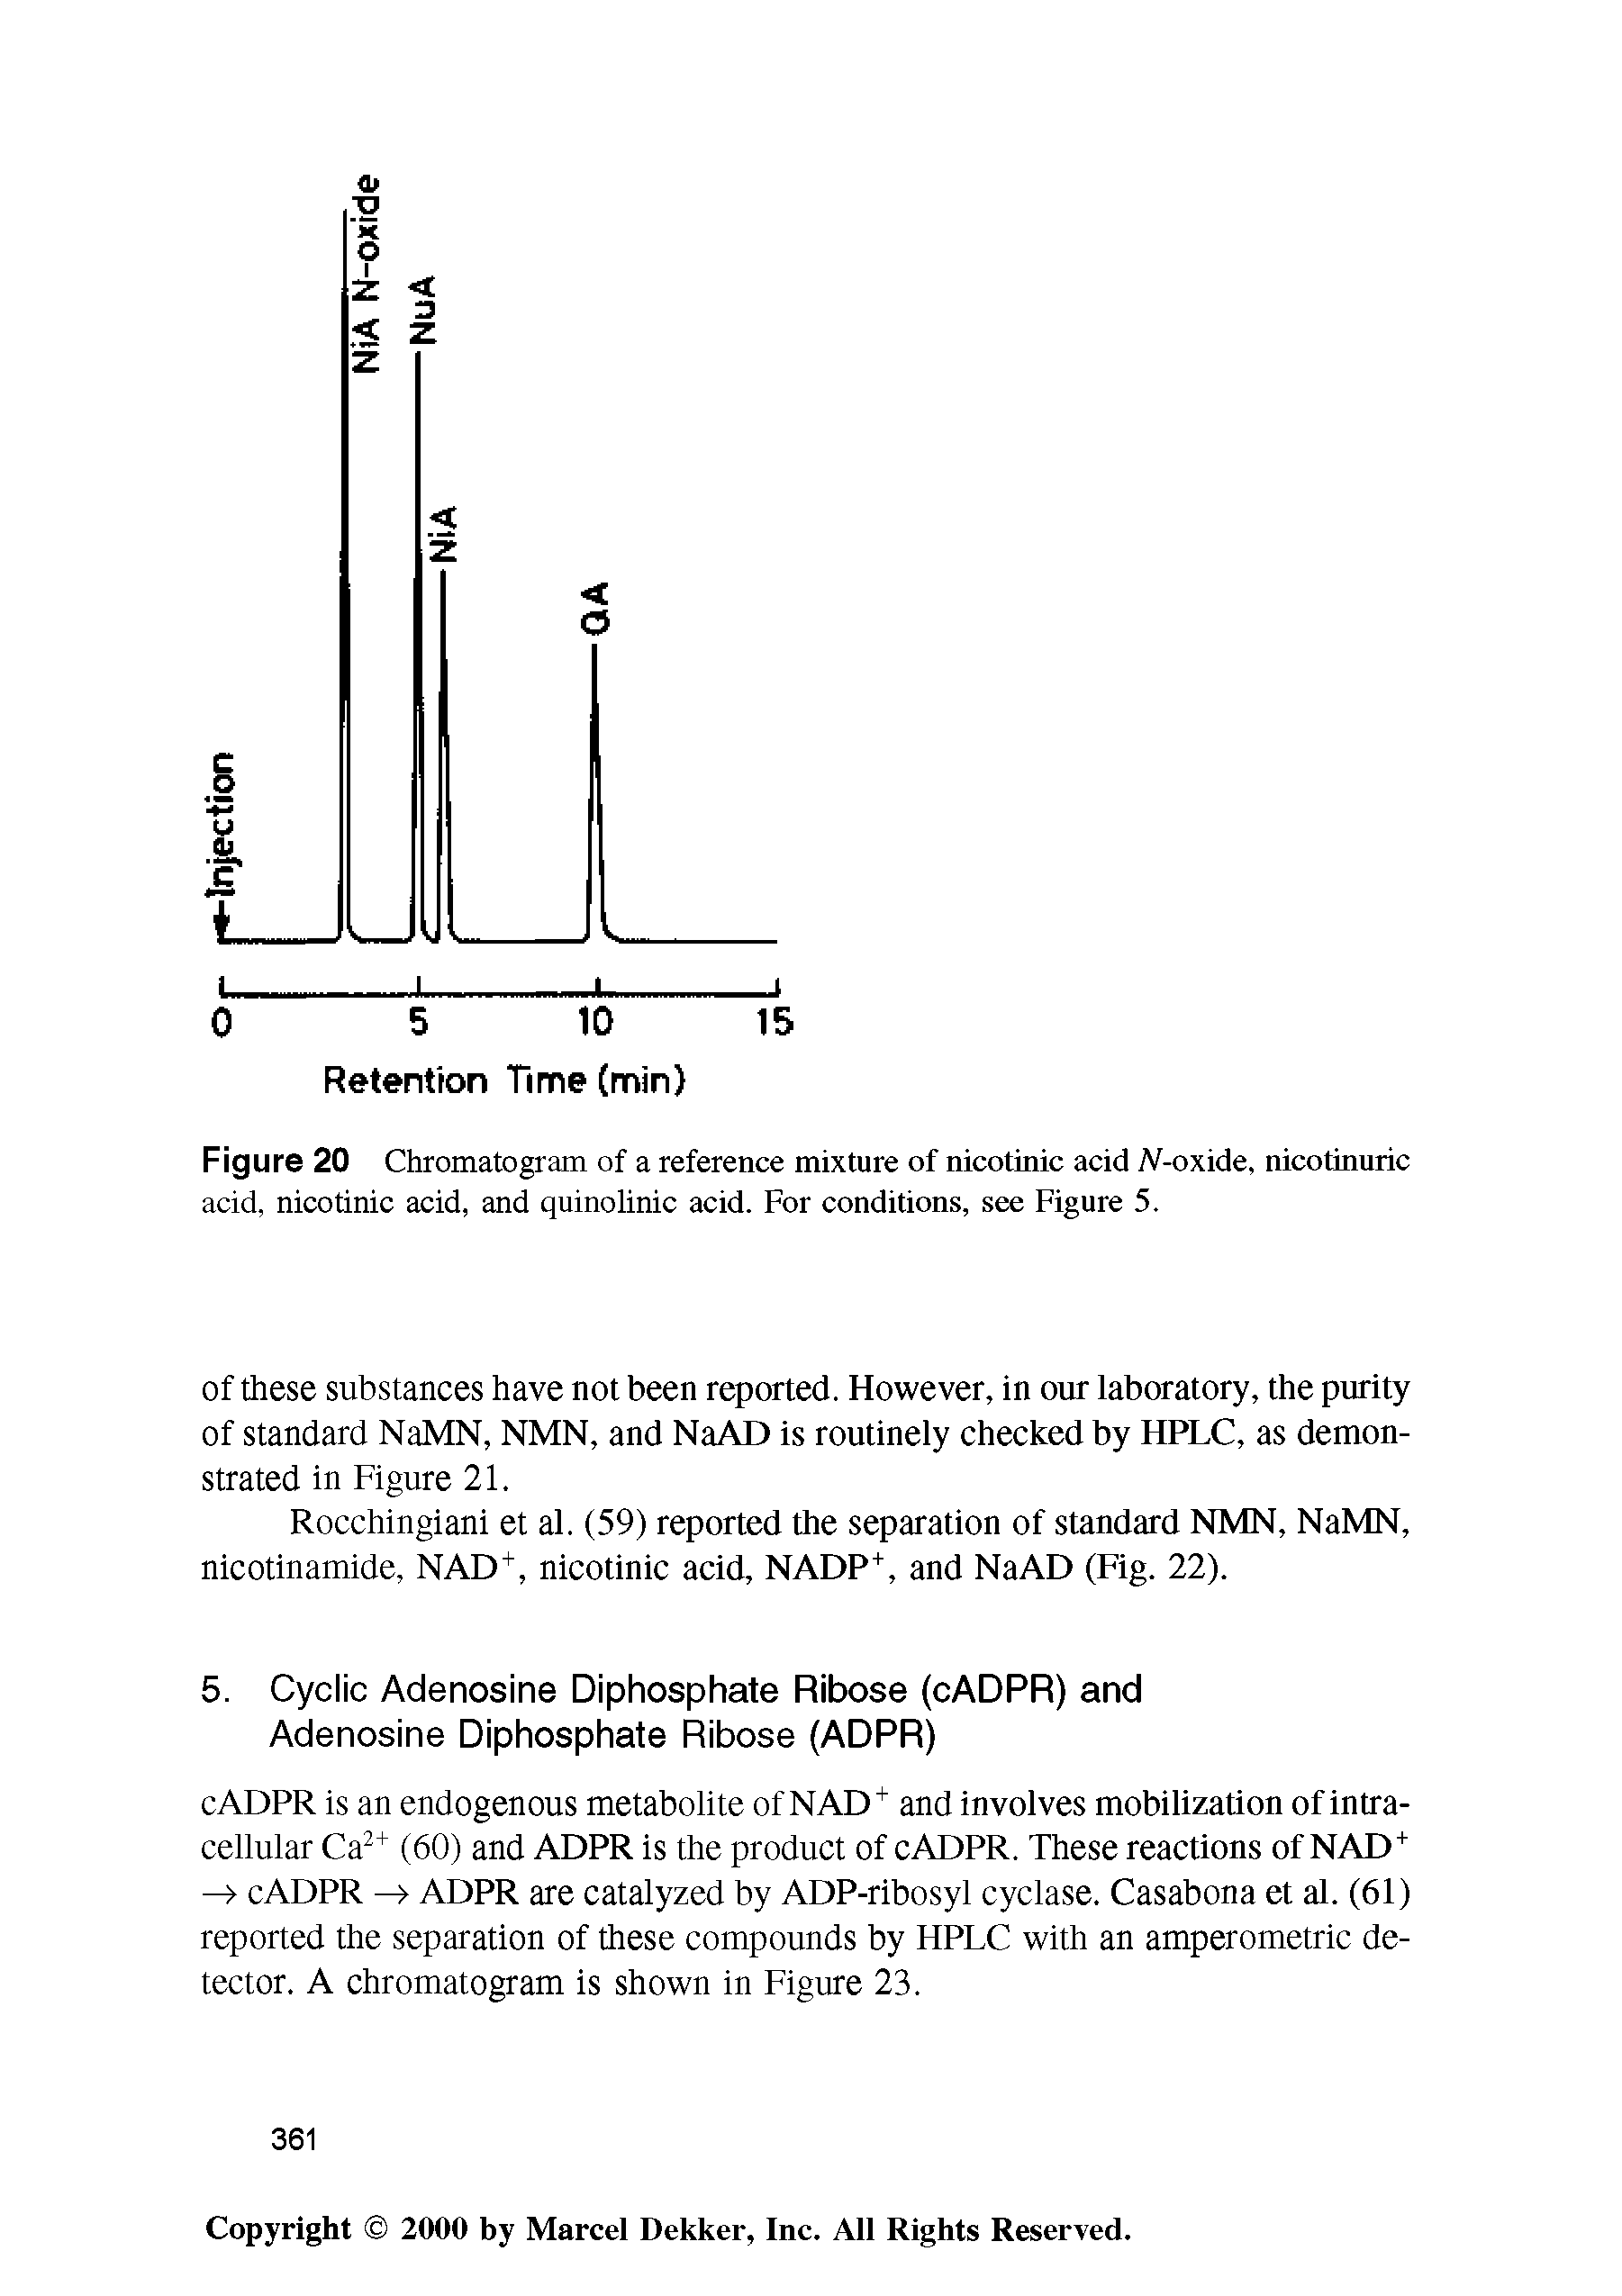 Figure 20 Chromatogram of a reference mixture of nicotinic acid A -oxide, nicotinuric acid, nicotinic acid, and quinolinic acid. For conditions, see Figure 5.